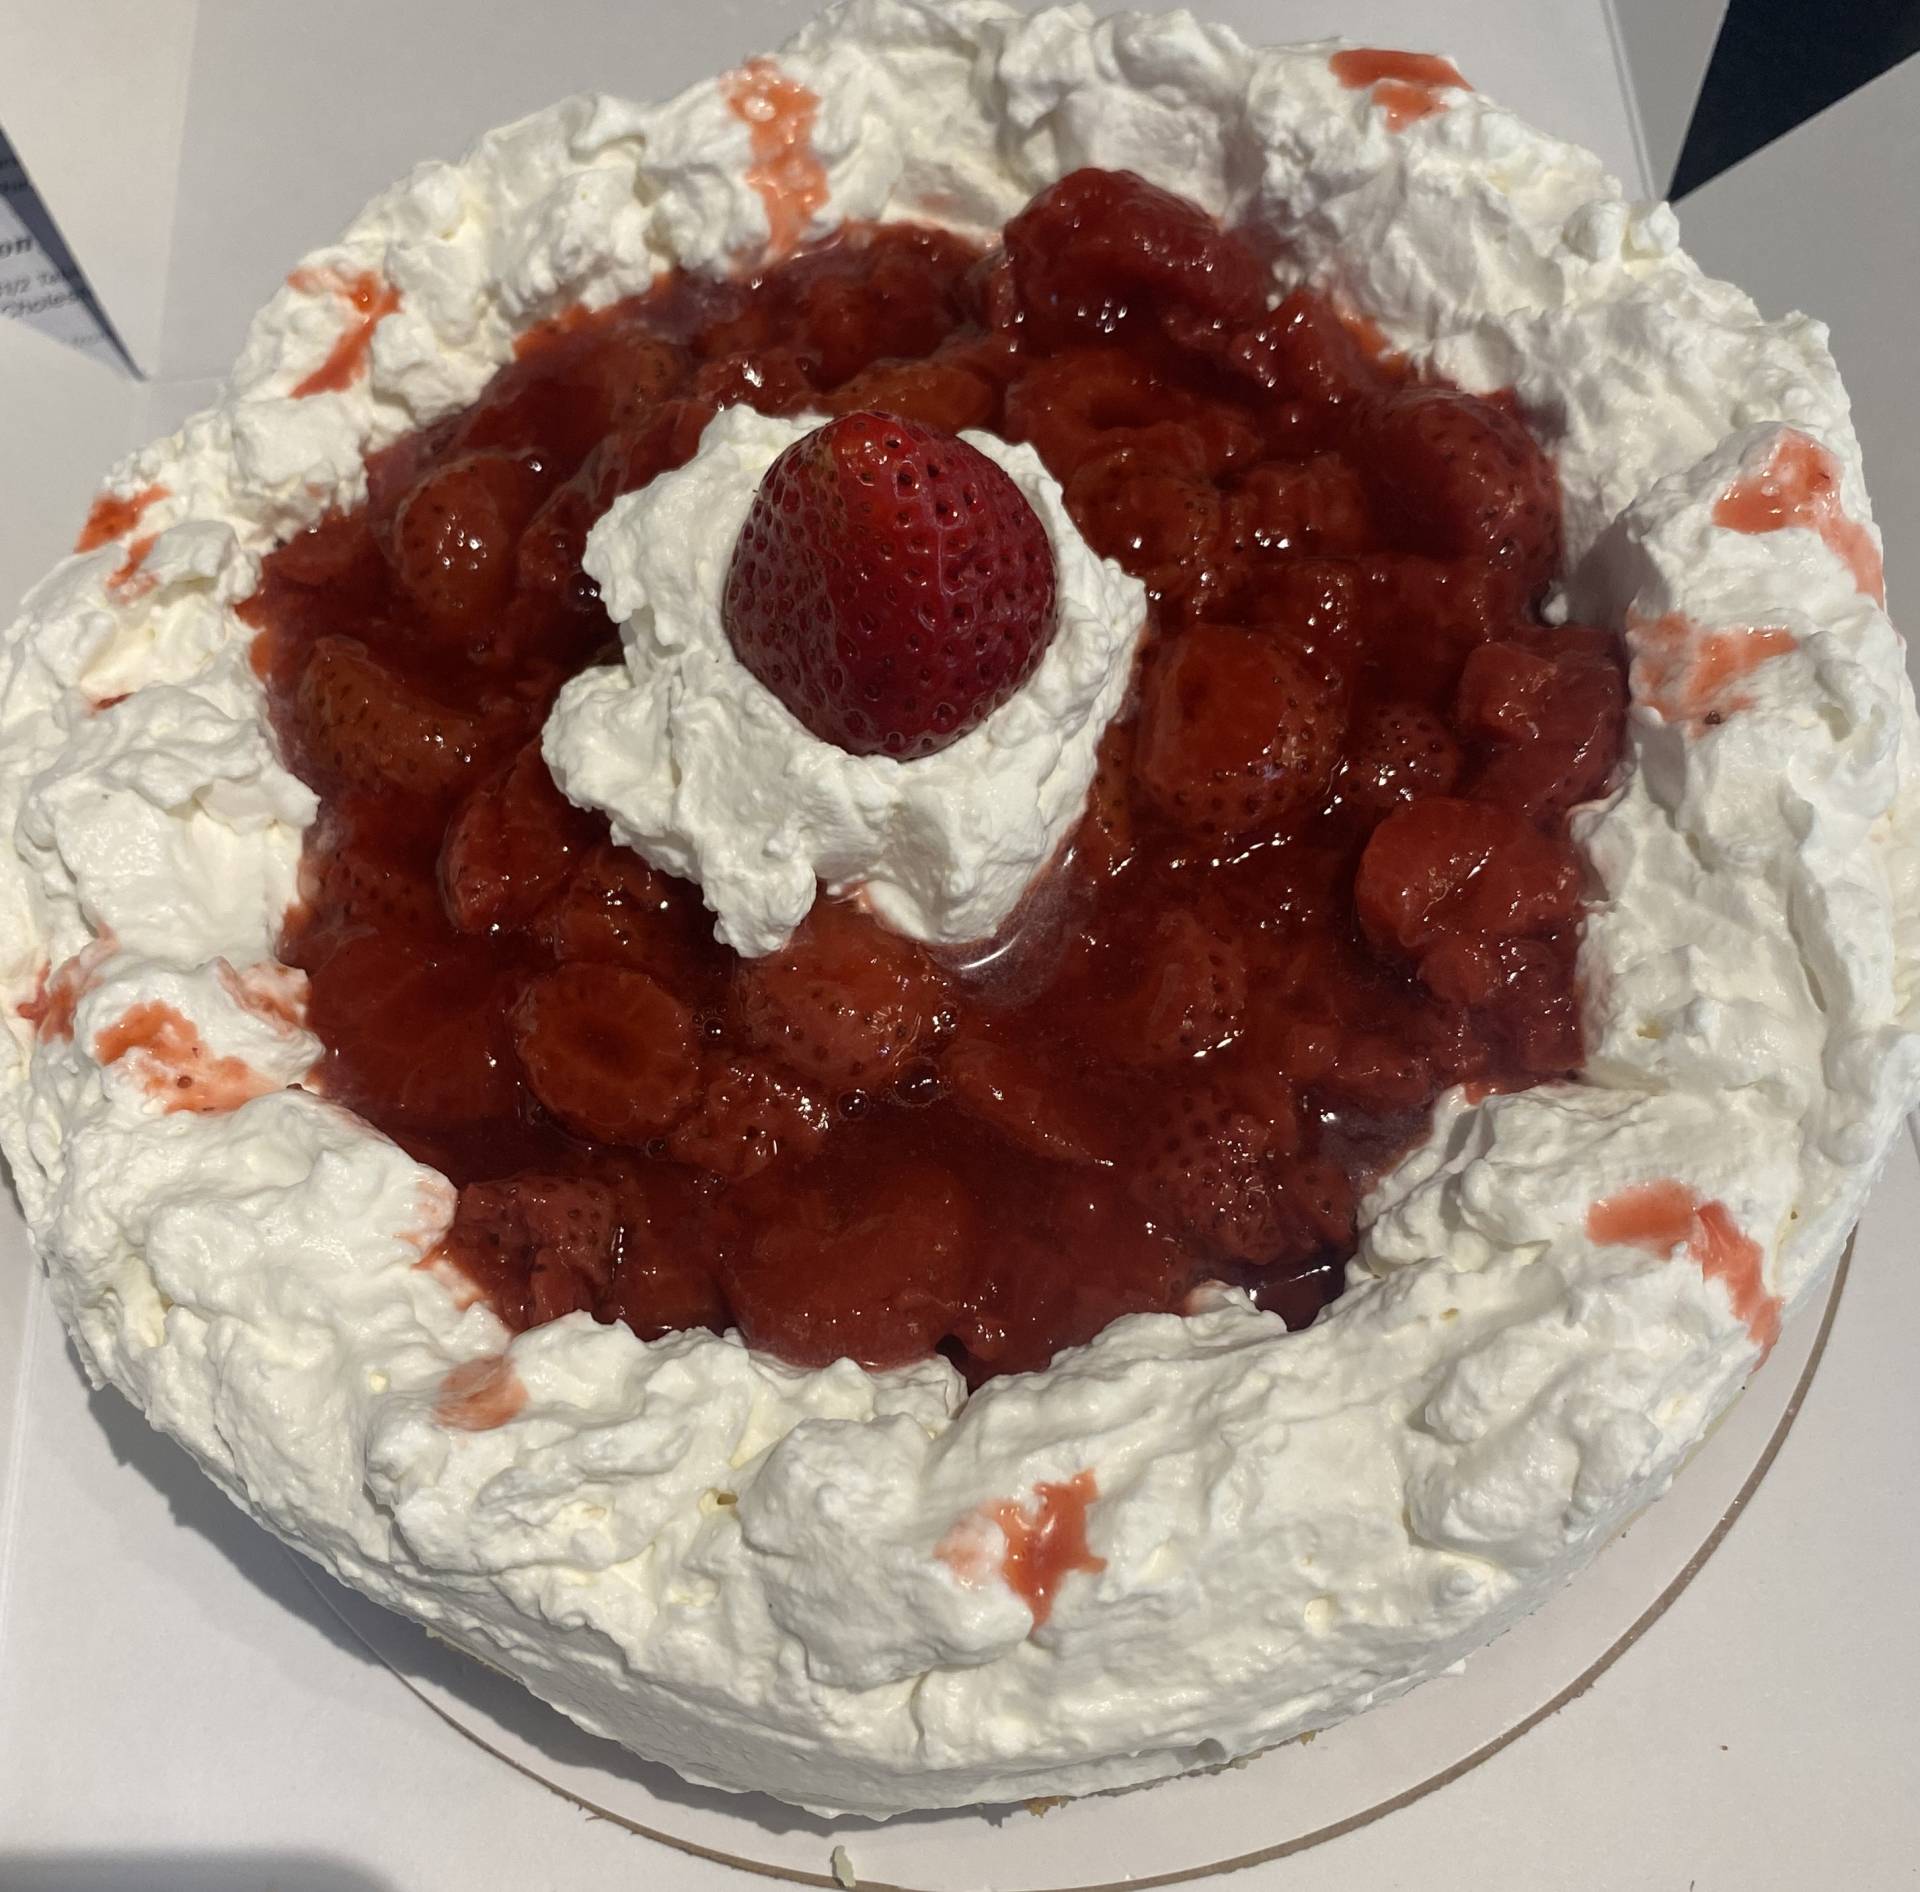 Seasonal cheesecake with strawberries